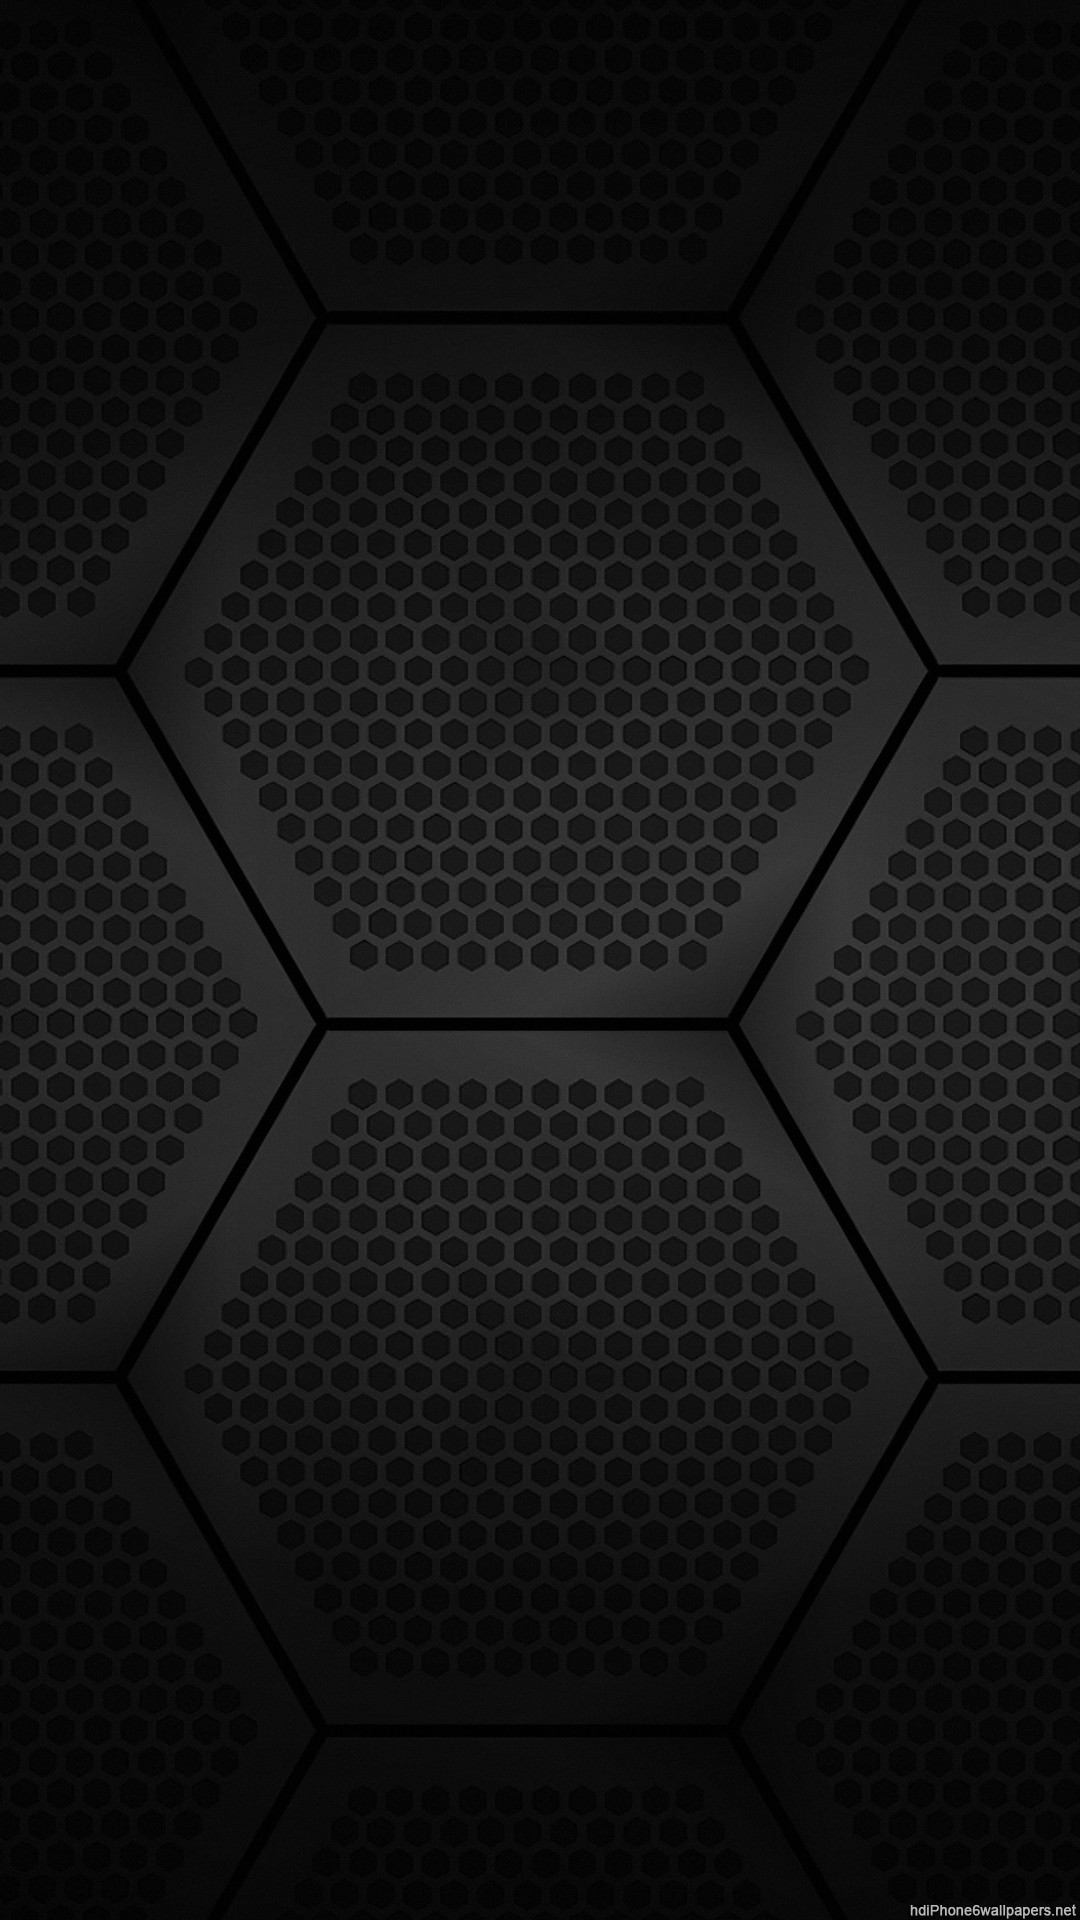 1080x1920 HD Hexagons iphone 6 wallpaper